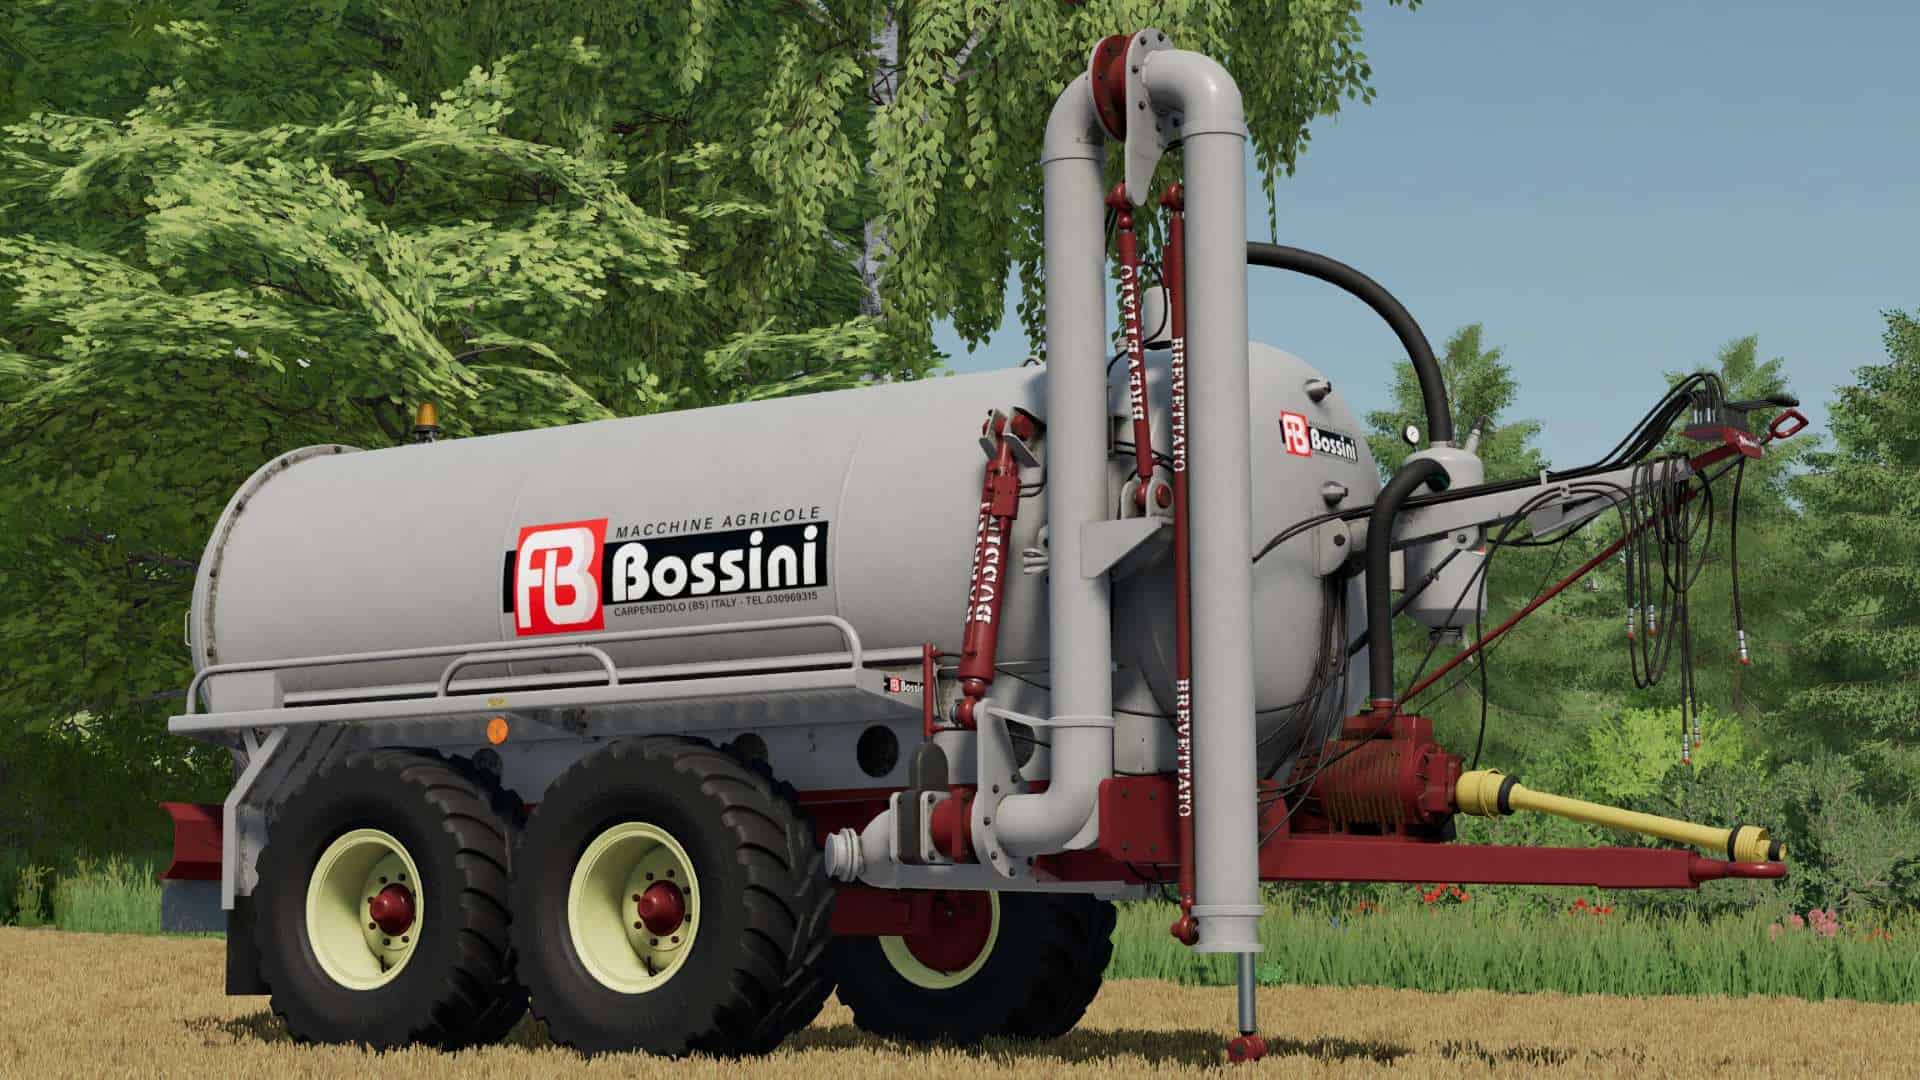 Bossini Ra100 V10 Fs22 Mod Download 0596